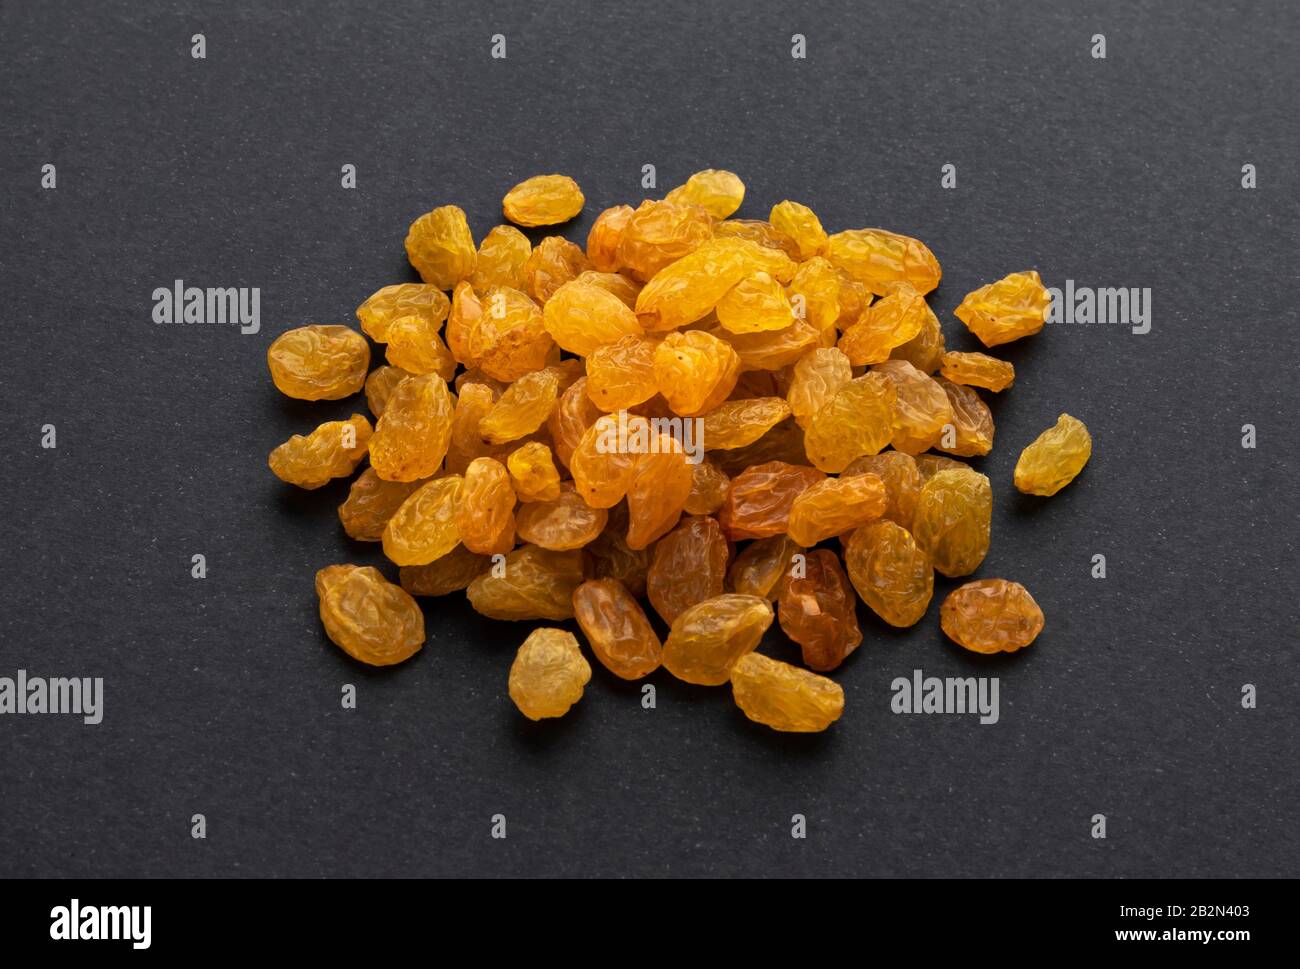 Dried yellow raisins on black background Stock Photo